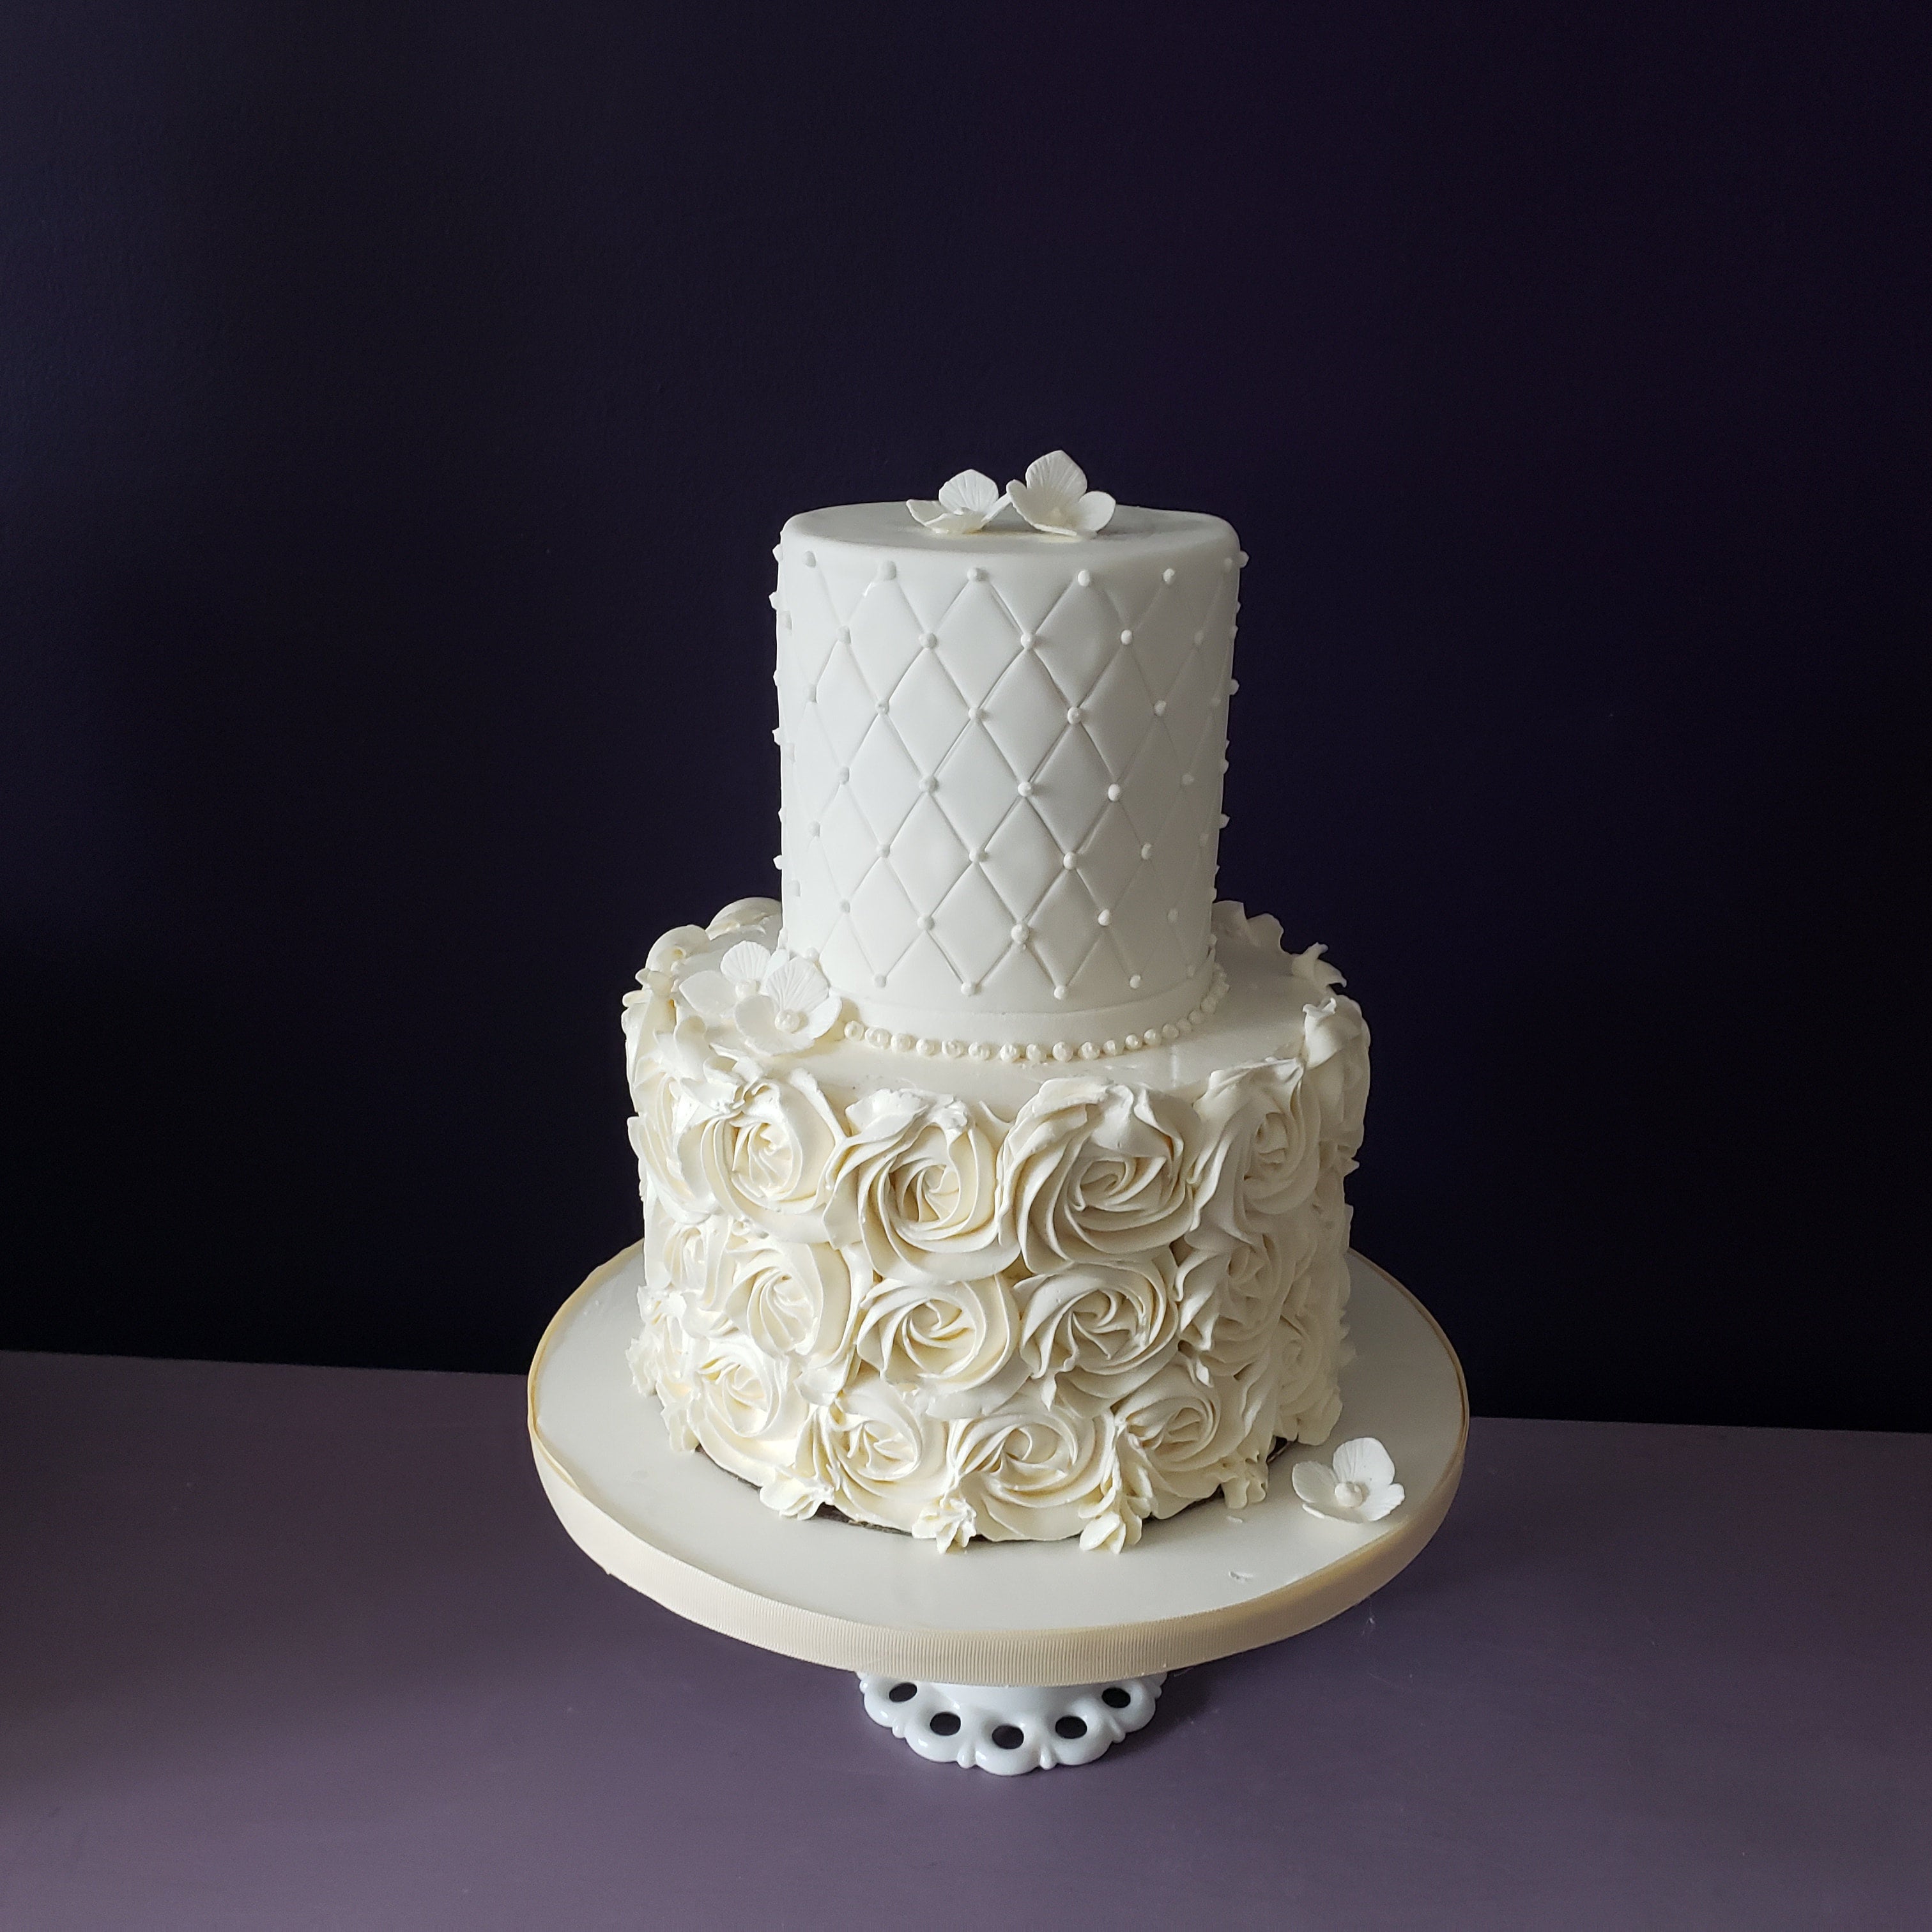 WEDDING CAKE STORAGE BOXES PLASTIC CANVAS PATTERN INSTRUCTIONS | eBay